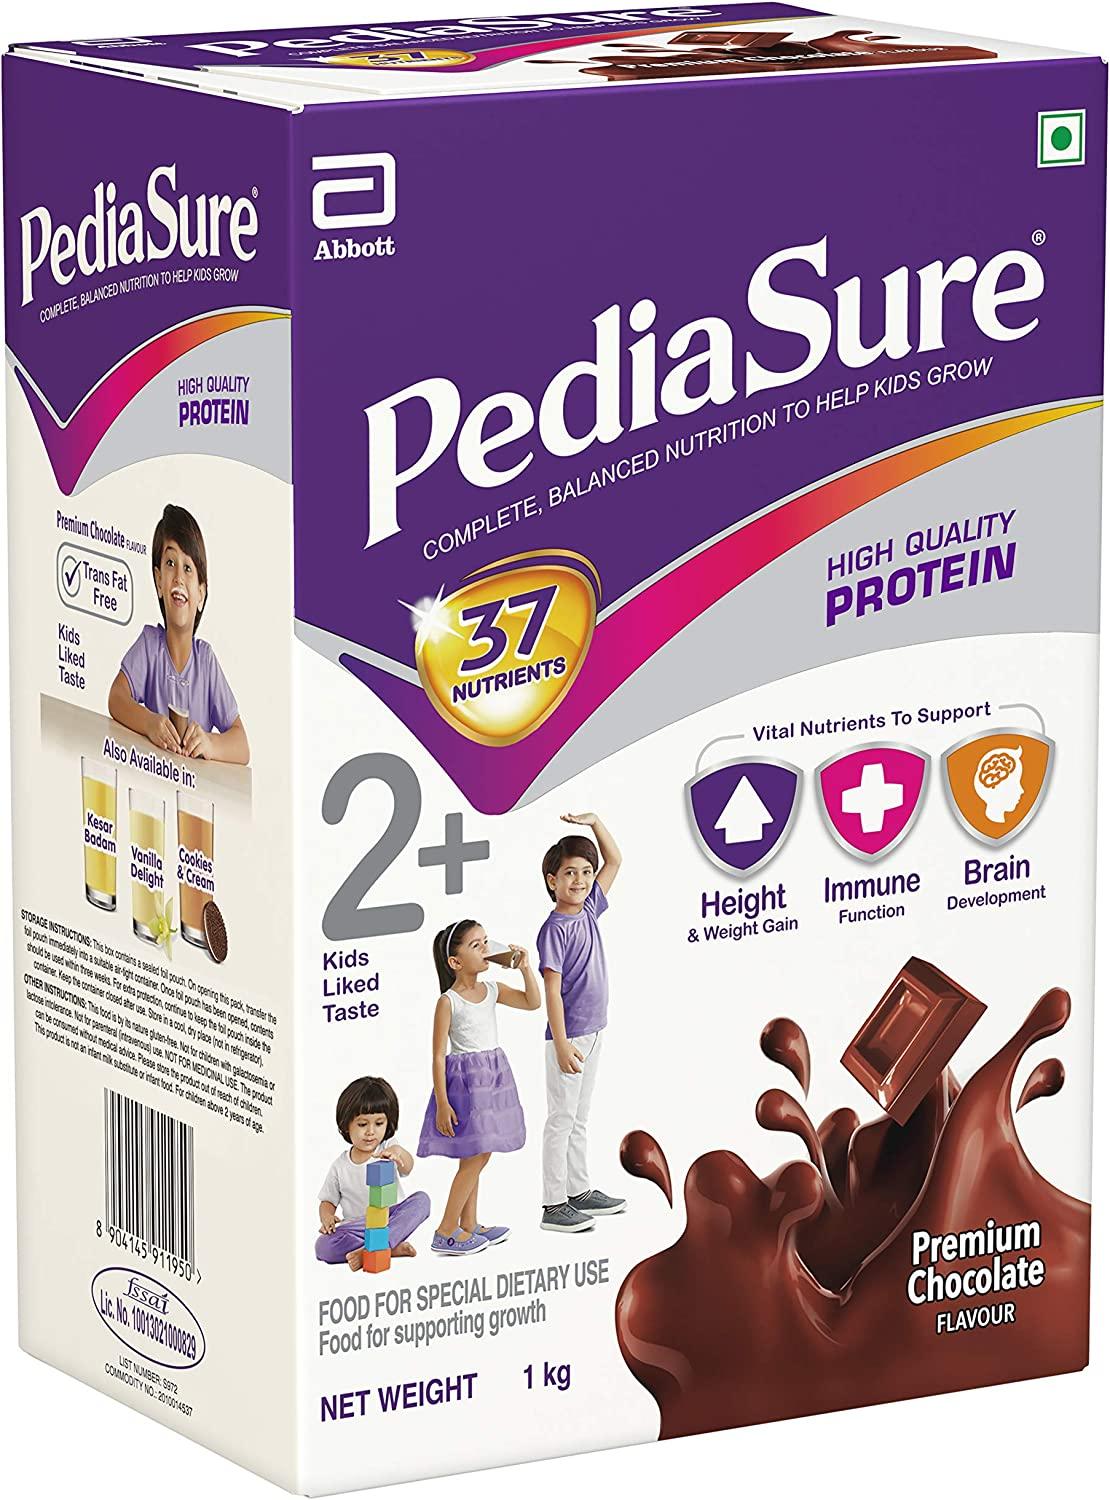 Abbott Pediasure Refill Pack - 1 kg (Chocolate)